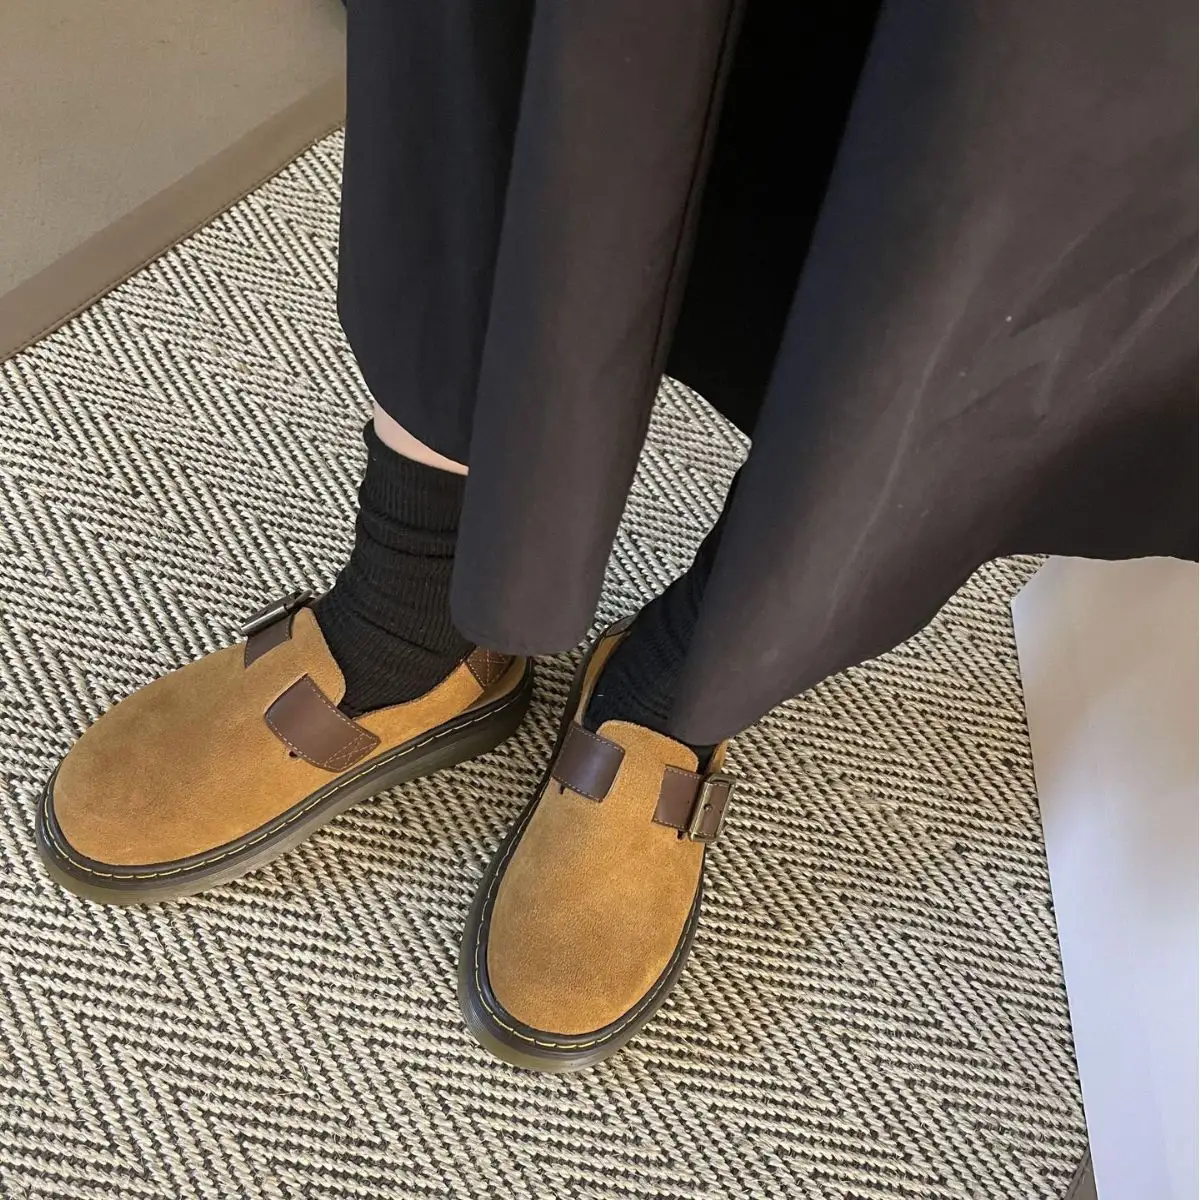 2023 Outono Nova Moda Post Frost Casual Dois Desgaste Bucken Sapatos Vintage couro genuíno sola grossa toe sandálias